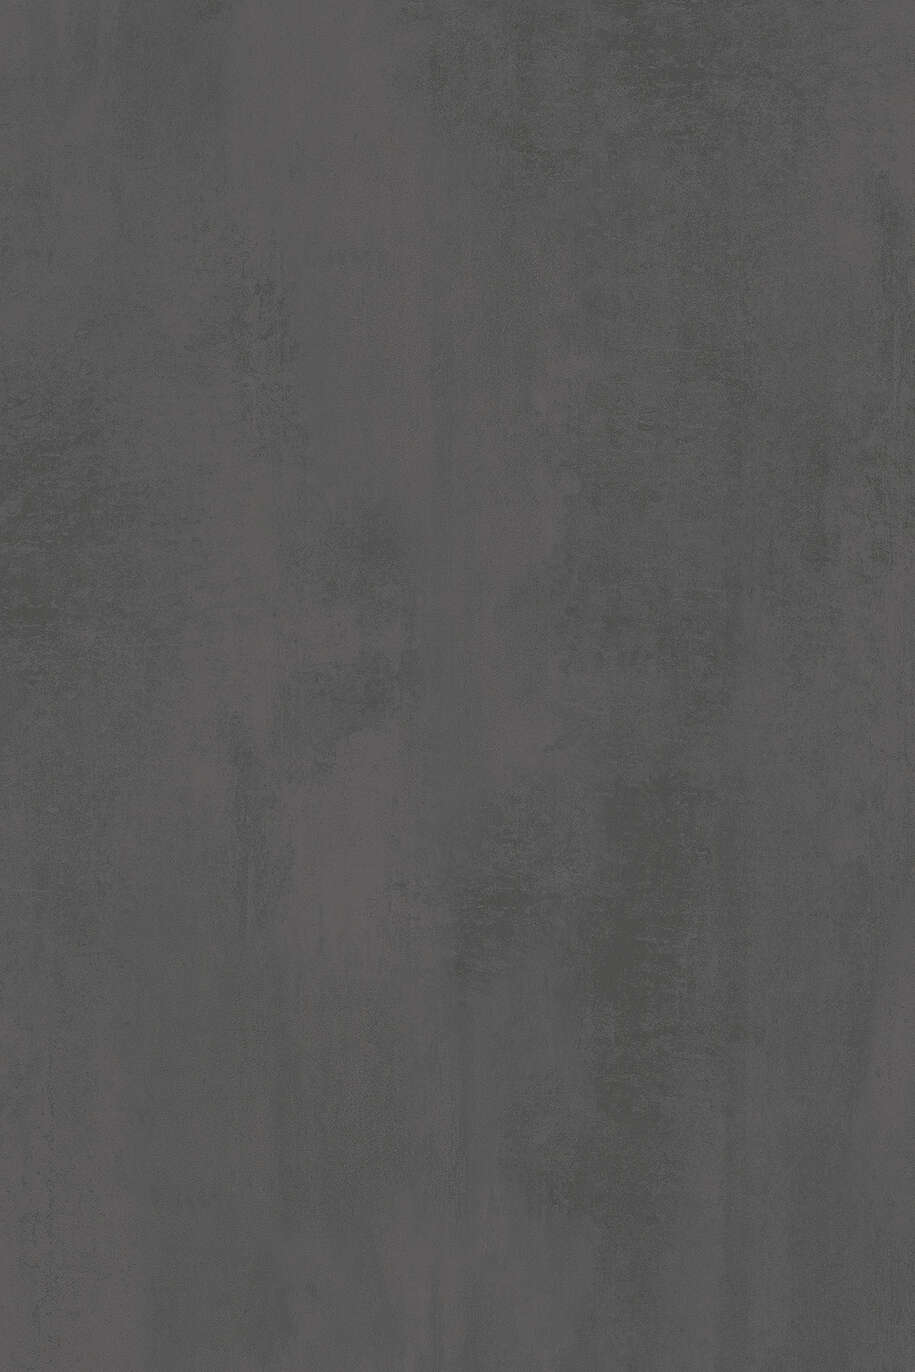 SD KR K201 RS Dark Grey Concrete 38 x 900 x 4100 mm 